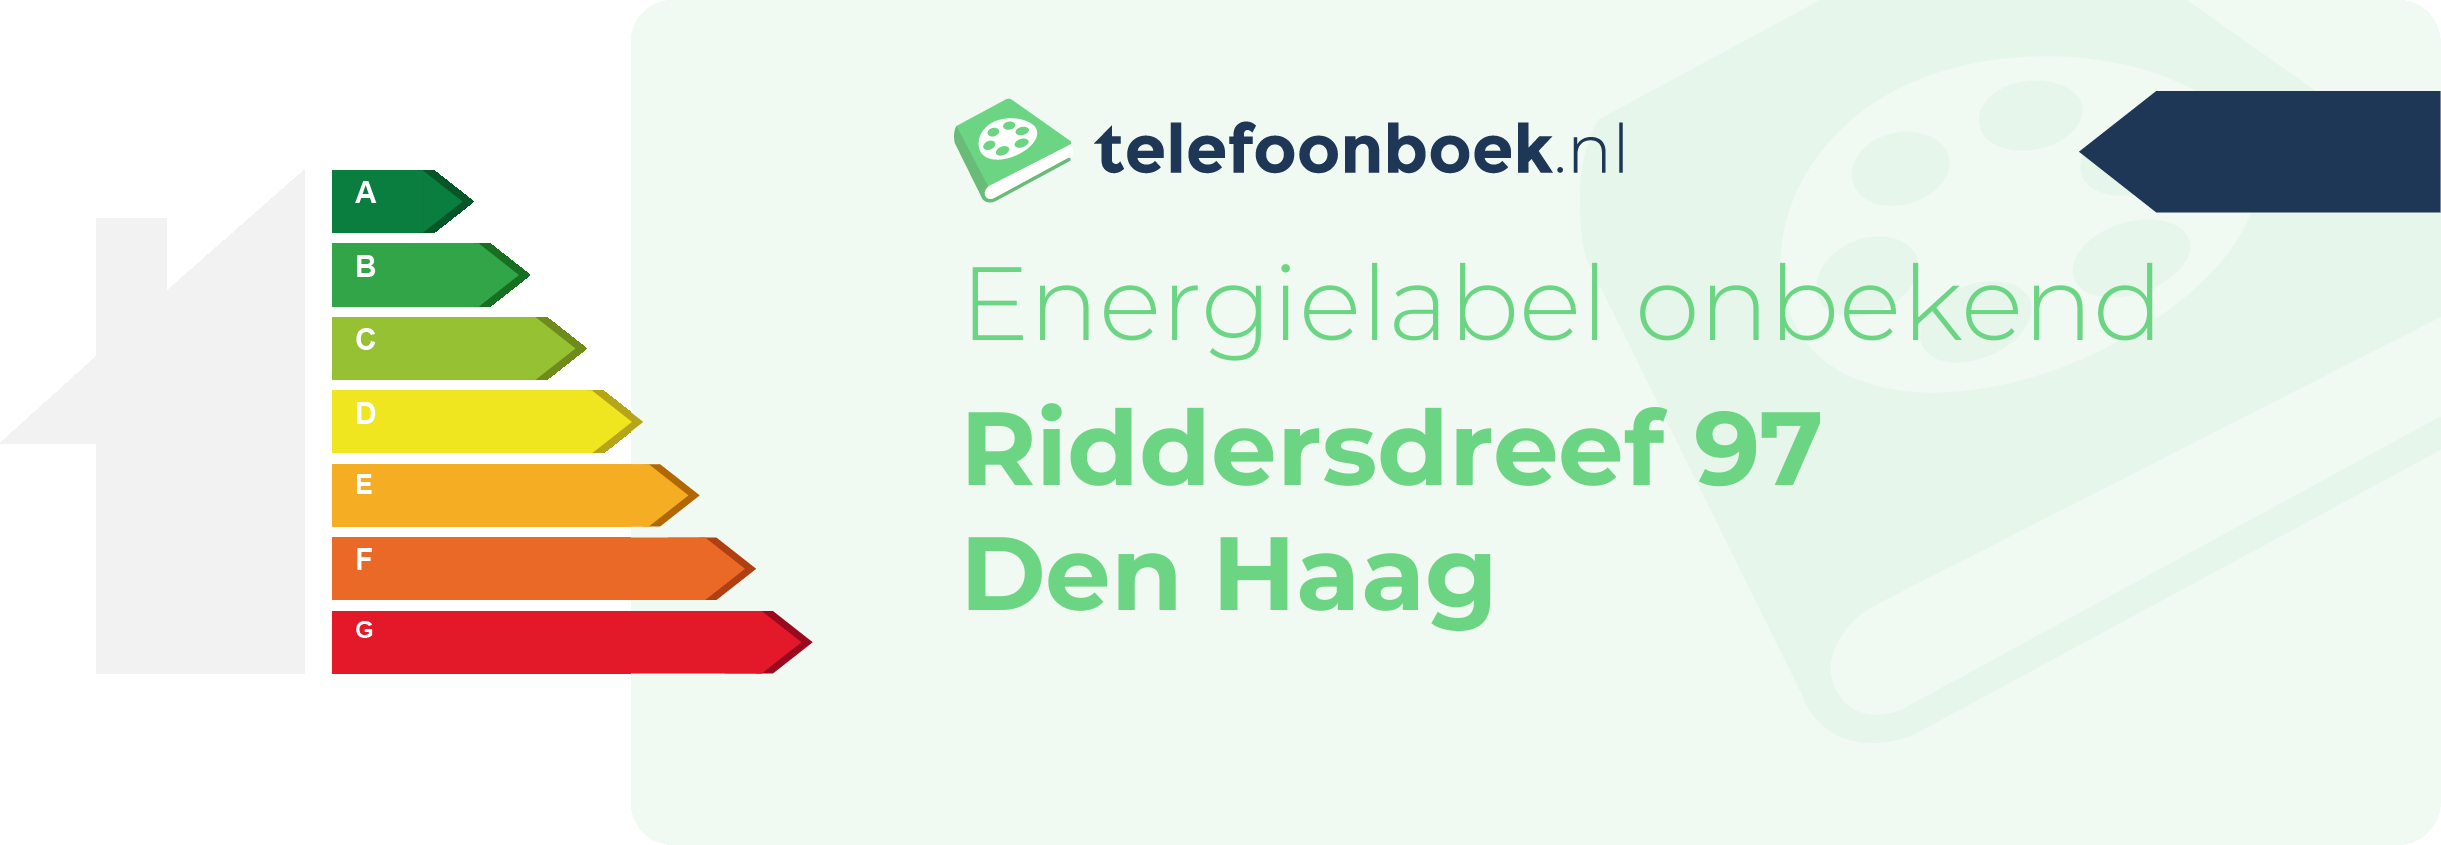 Energielabel Riddersdreef 97 Den Haag